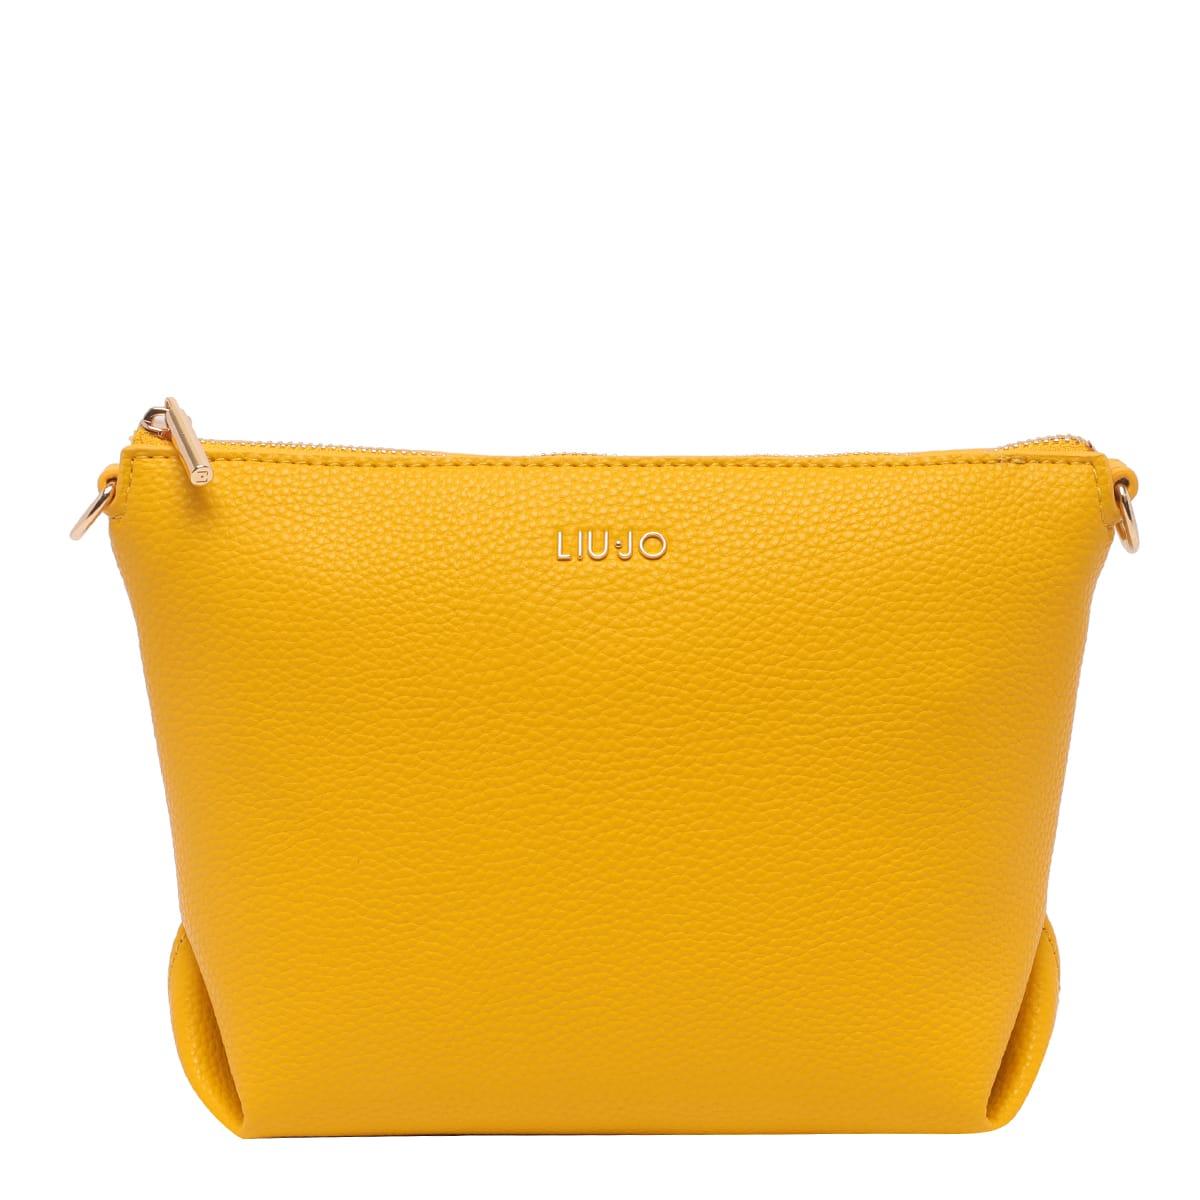 Liu Jo Crossbody Bag in Yellow | Lyst